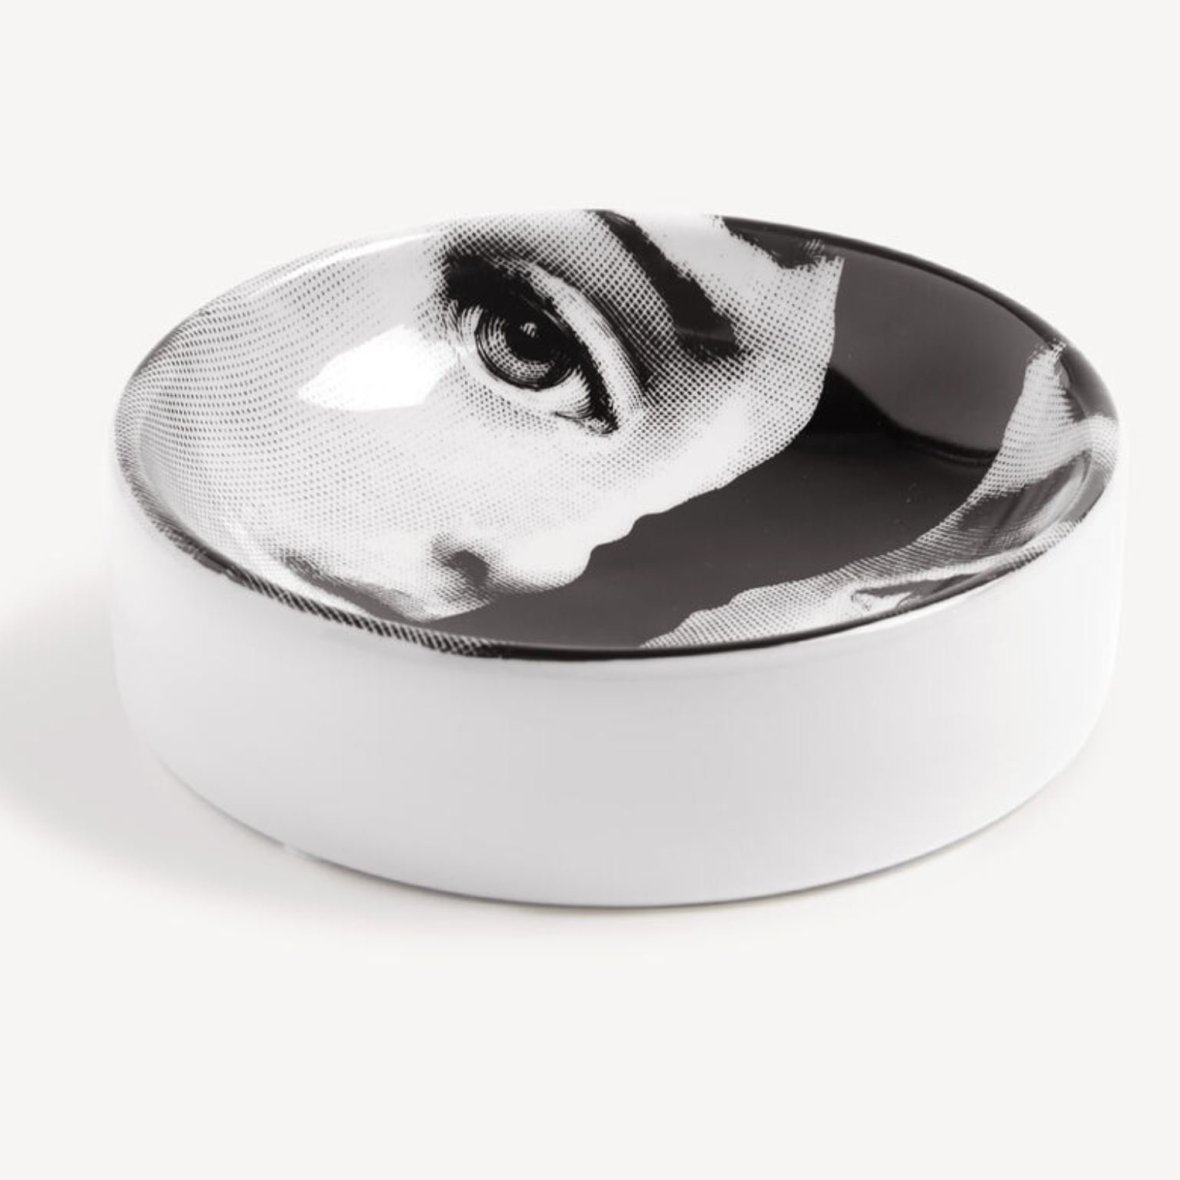 round-ashtray-tema-e-variazioni-n-10-black-white-2